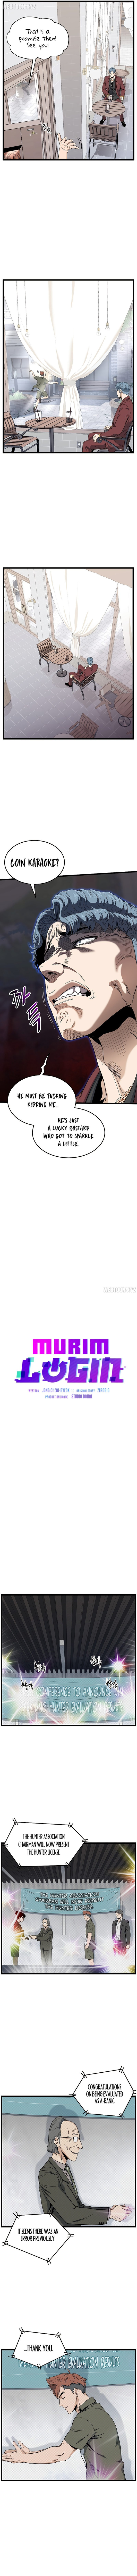 murim-login-chap-139-4